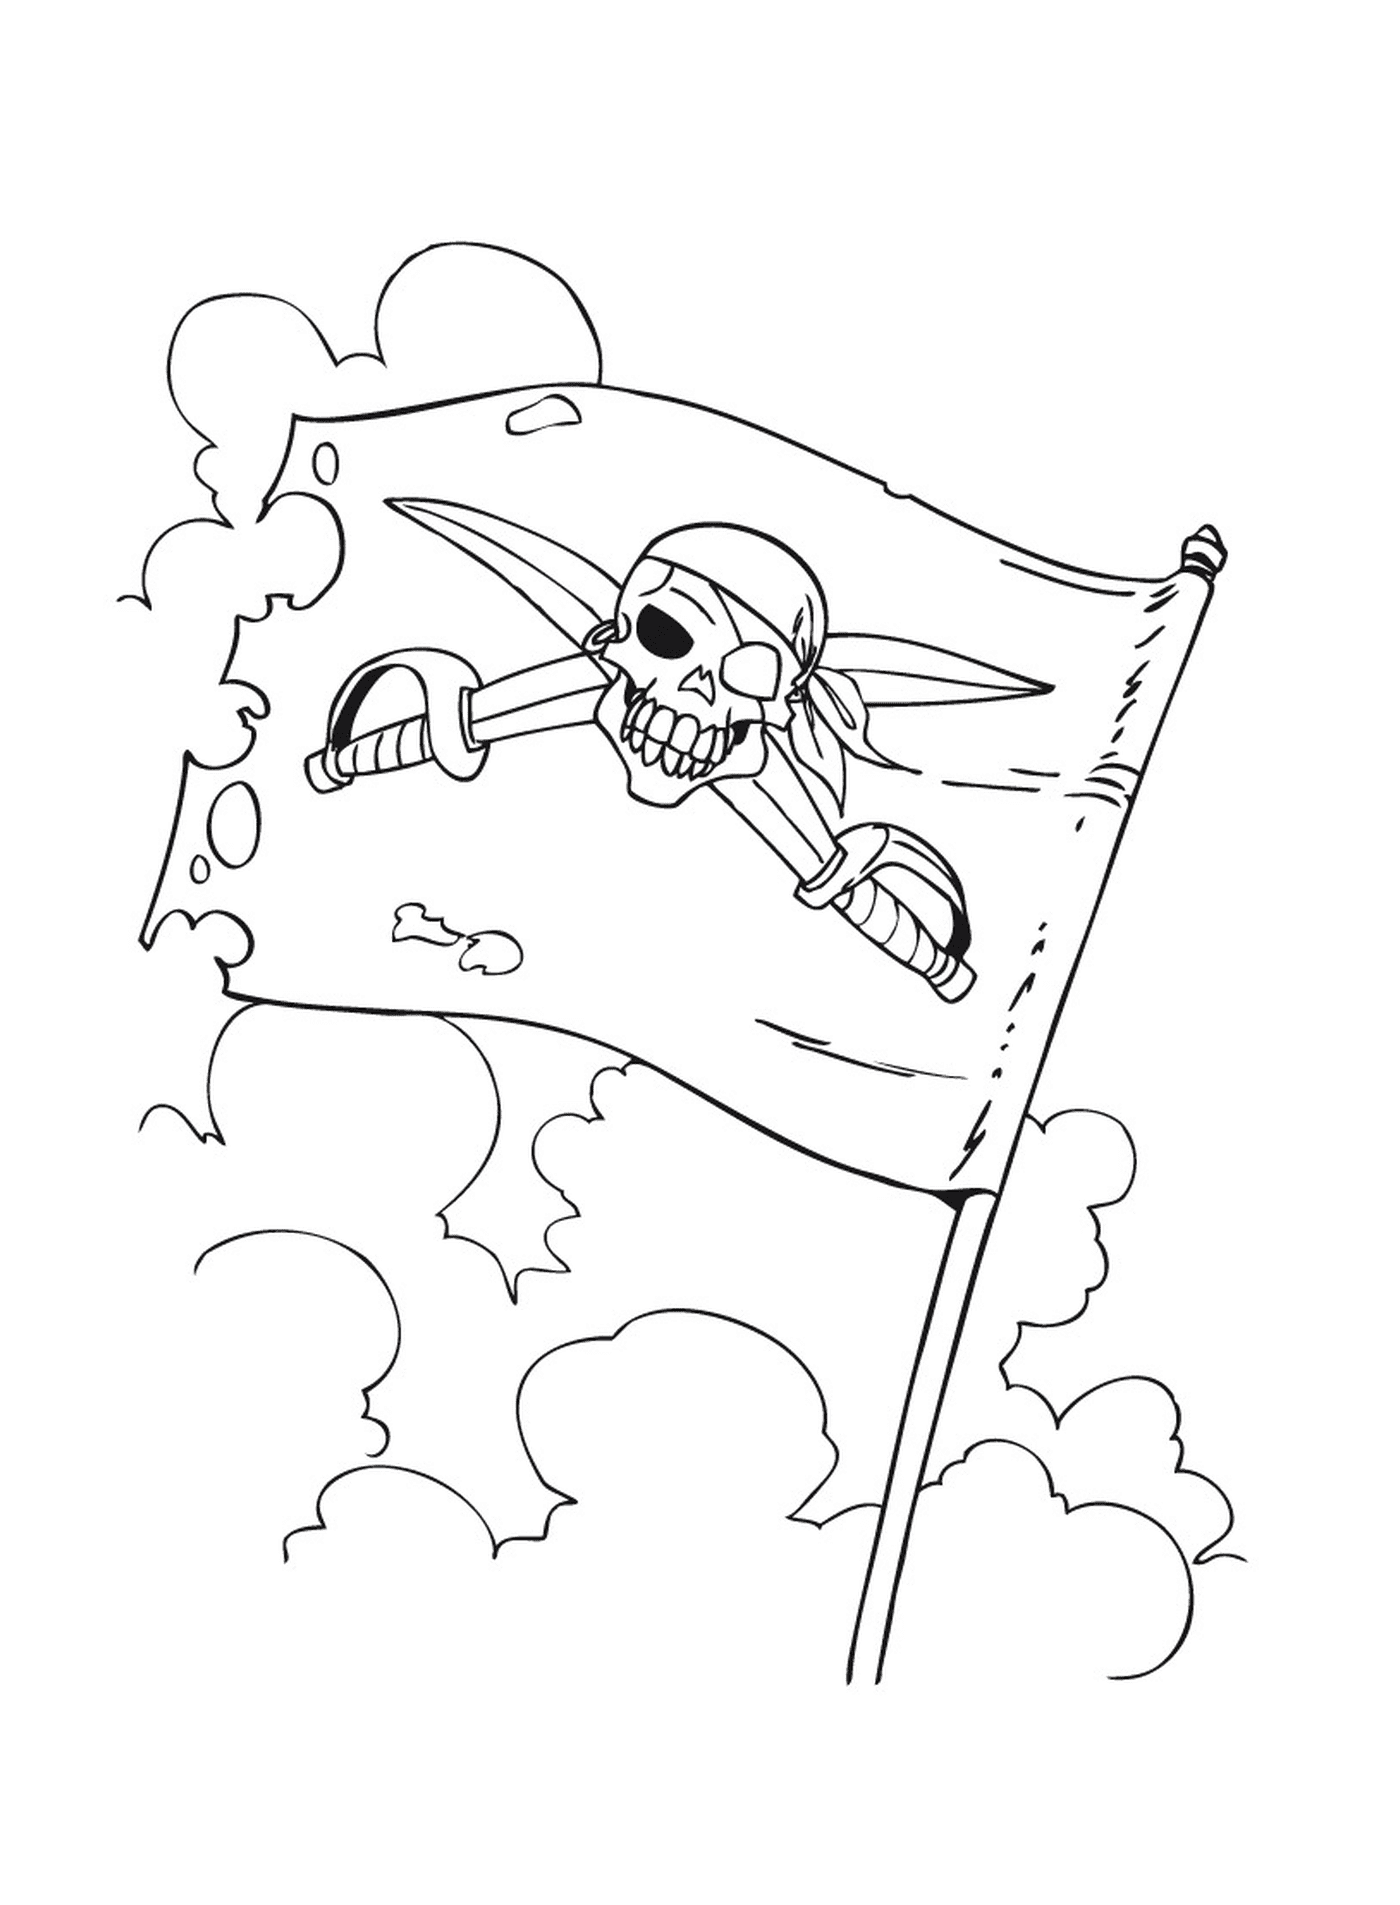  Bandera pirata amenazante 